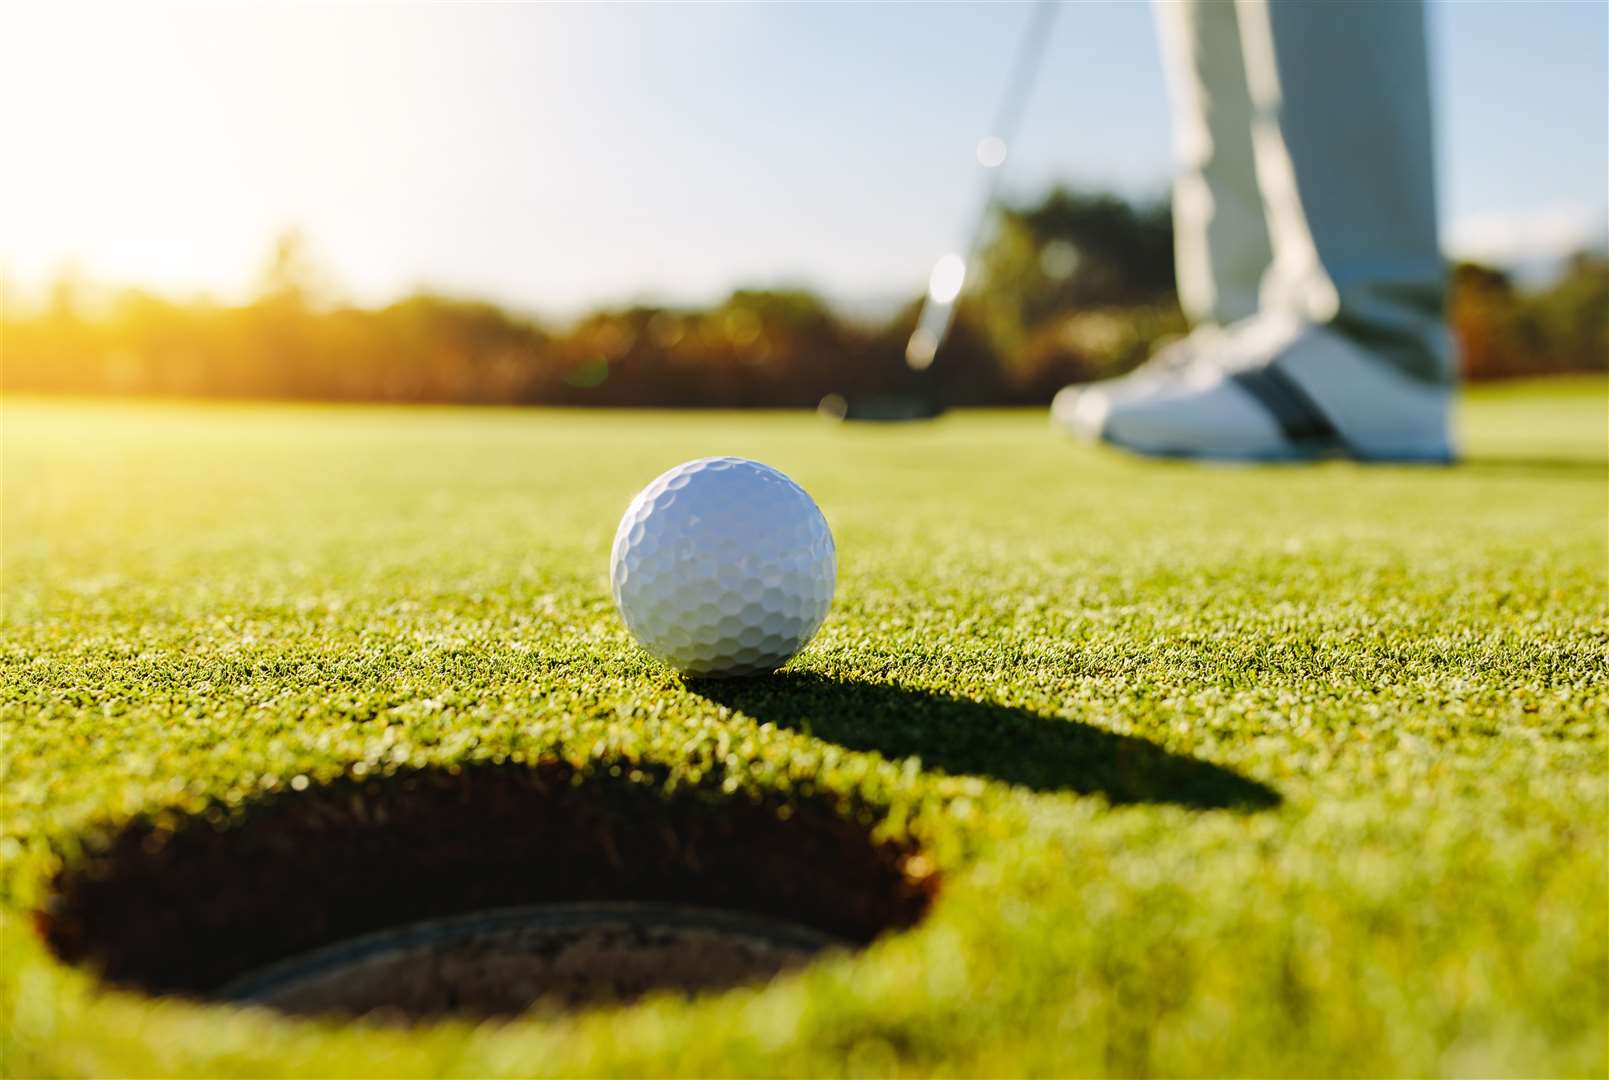 Scottish Golf North Championships is on Sunday, May 29.